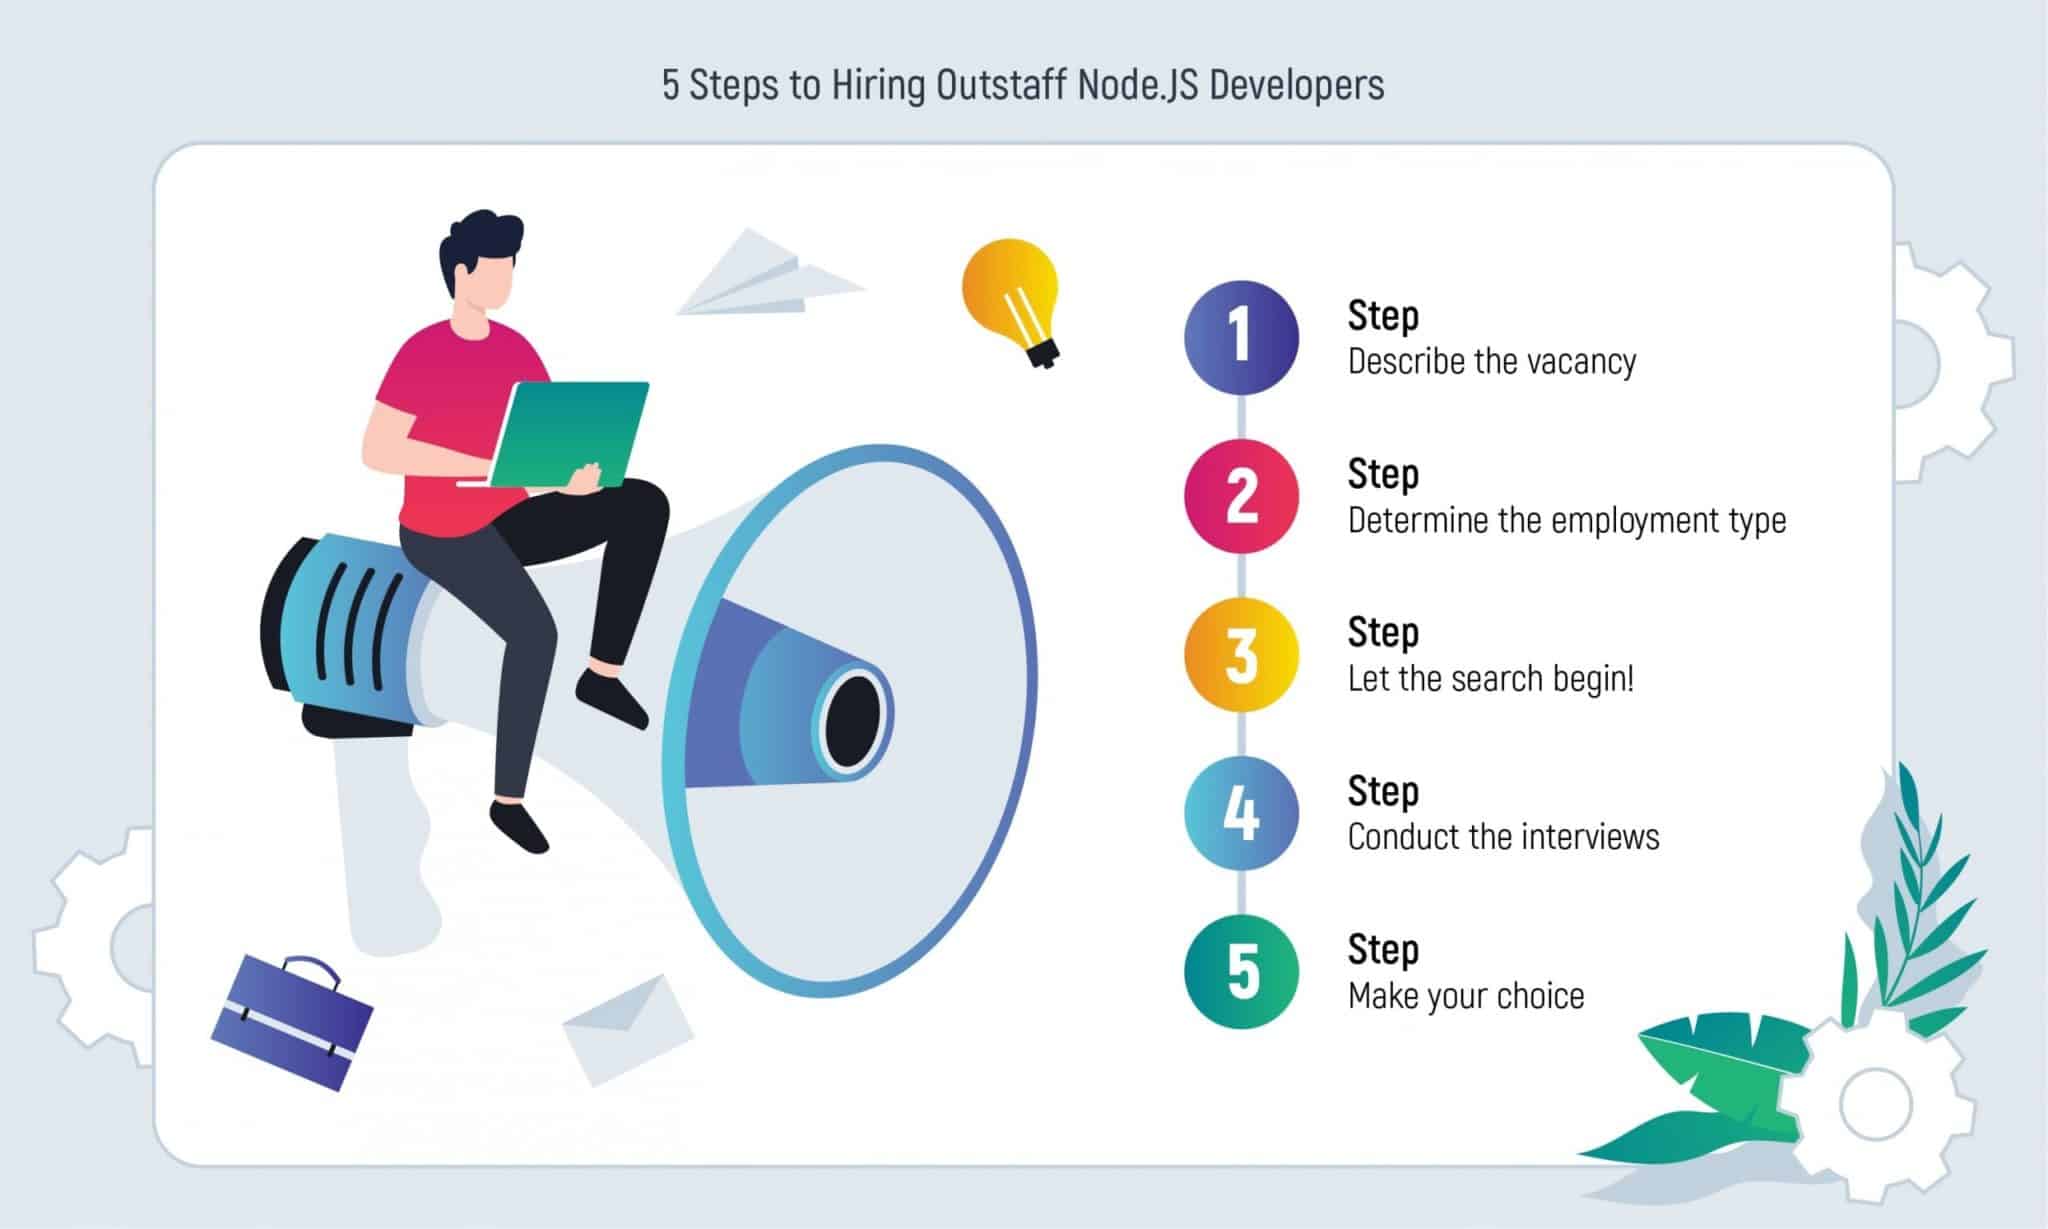 5 Steps to Hiring Outstaff Node.JS Developers